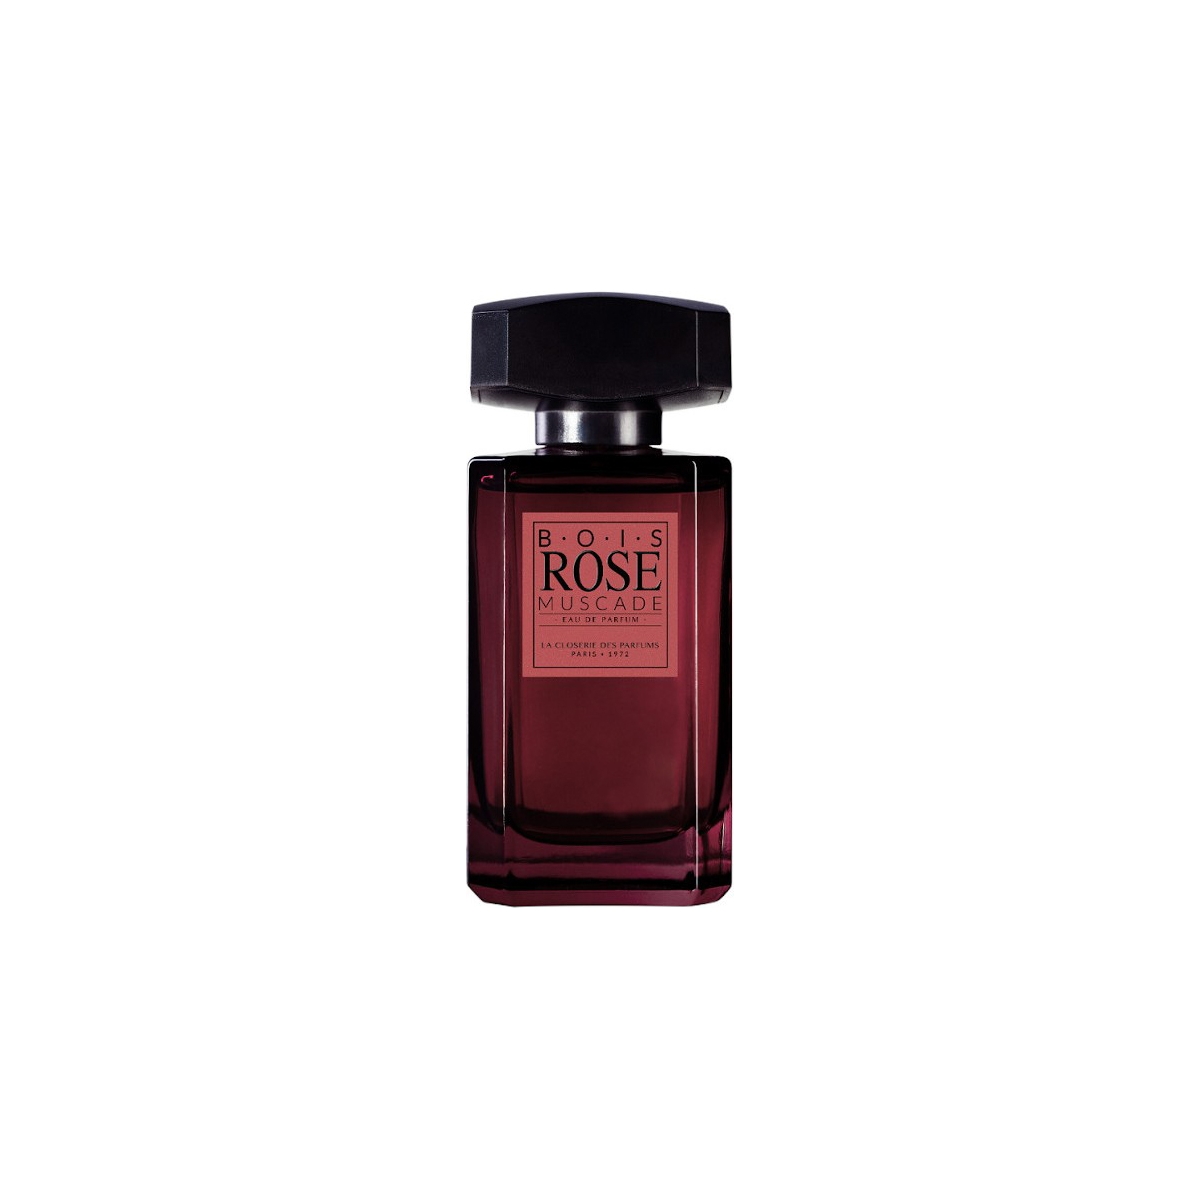 Bois Rose La Closerie des Perfumes Perfumes, Profumi Unisex, Arada Perfumes